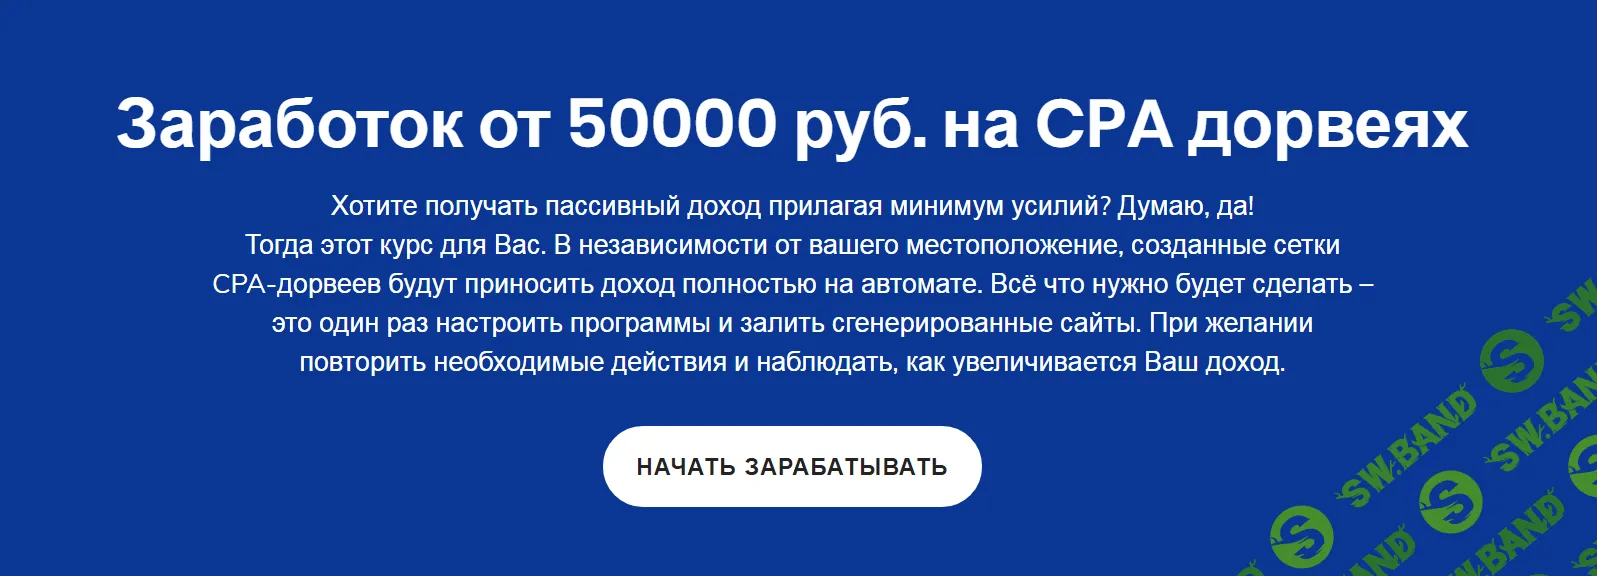 [Сергей Белоусов] Заработок от 50000 руб. на CPA дорвеях (2019) [Профи]